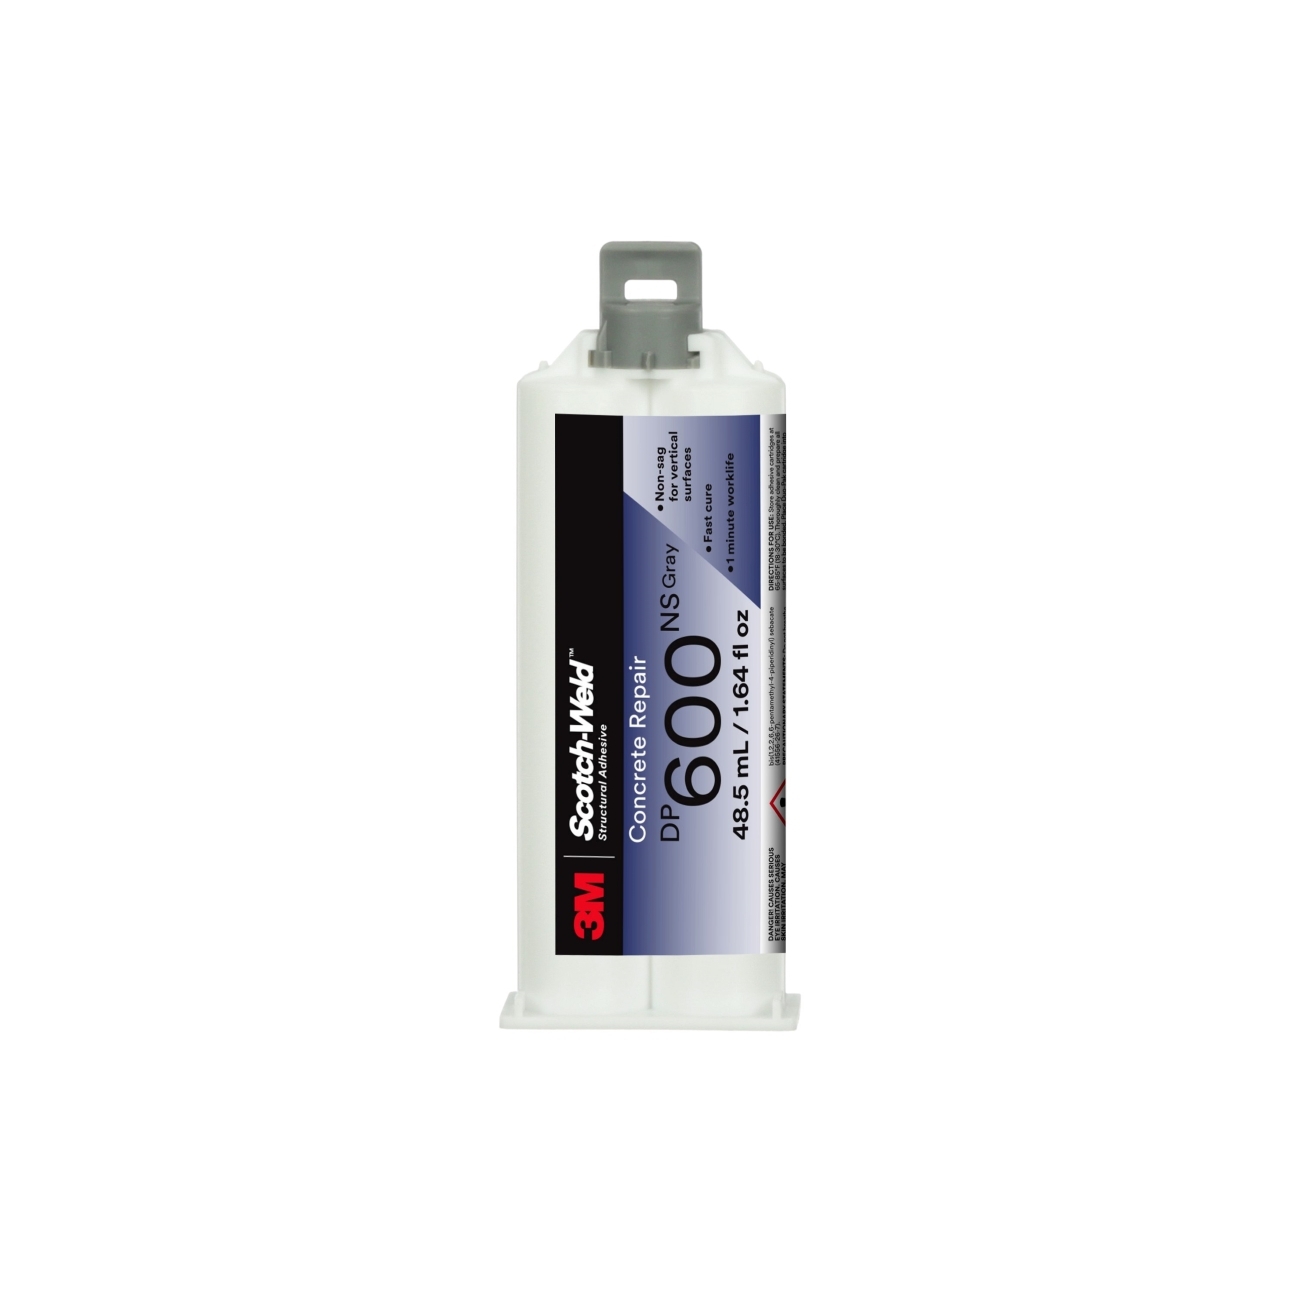 3M Scotch-Weld polyurethane adhesive for concrete repair DP600, gray, 48.5 ml